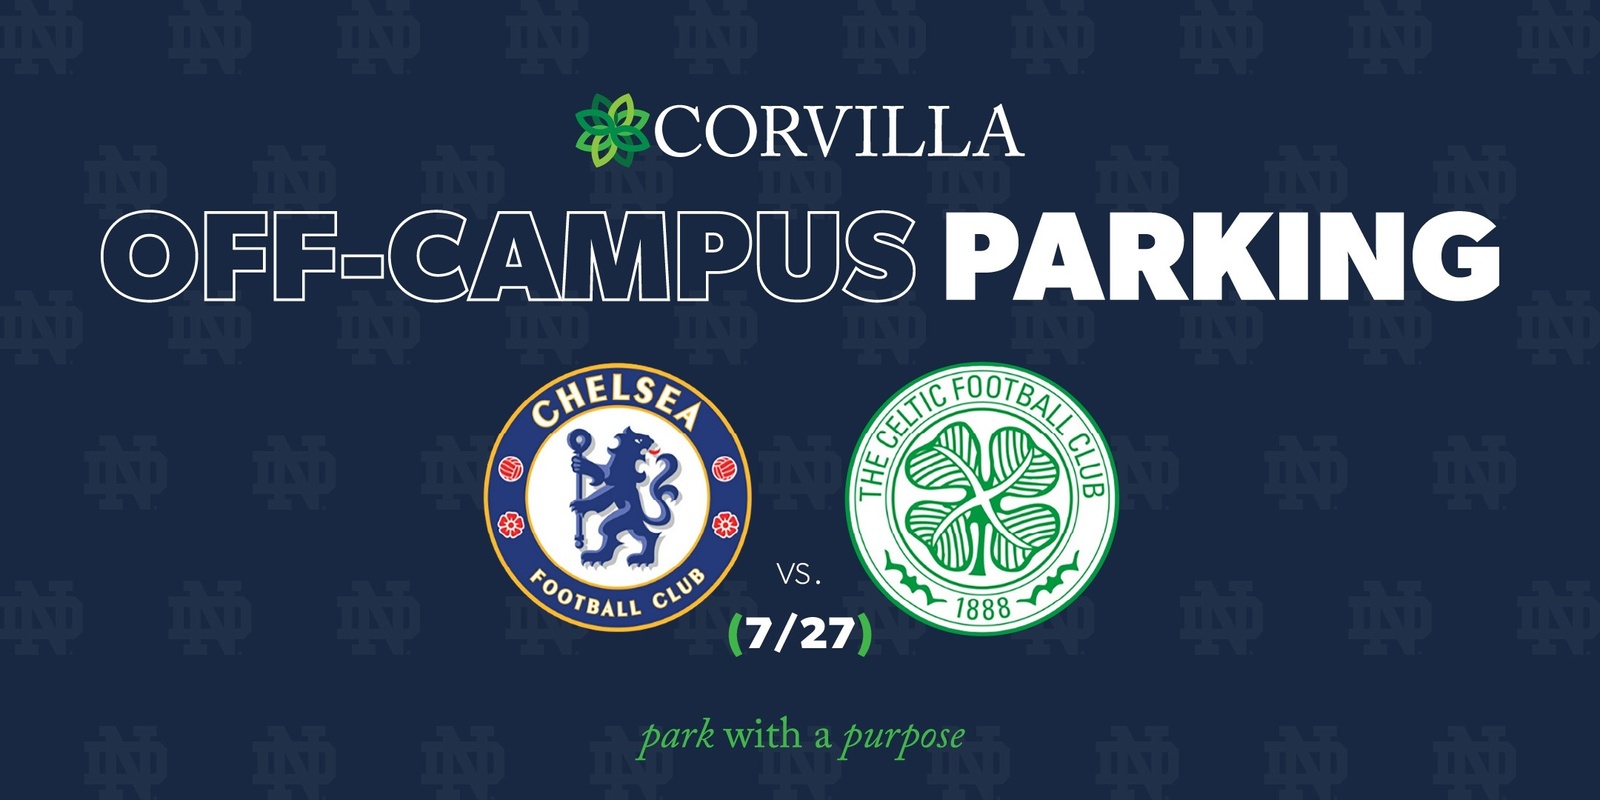 Banner image for Corvilla's Notre Dame Off Campus Parking for Chelsea FC vs. Celtic FC